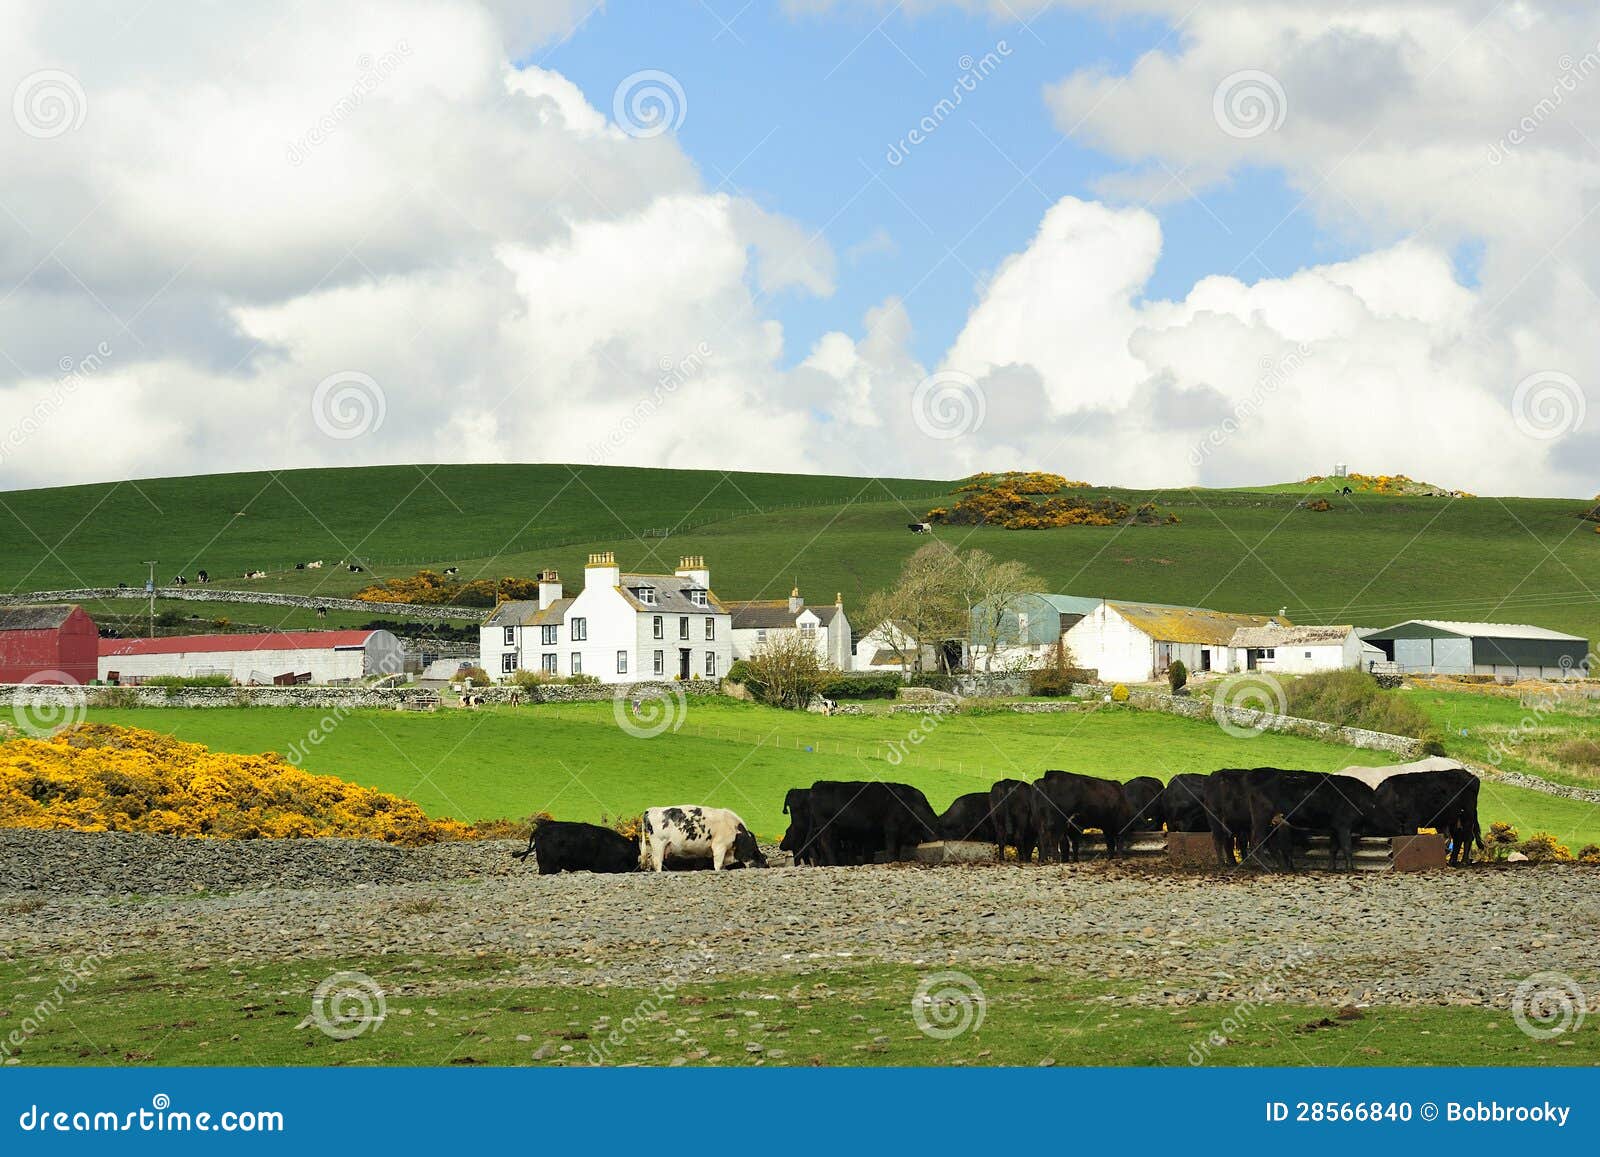 lowland cattle farm, scotland